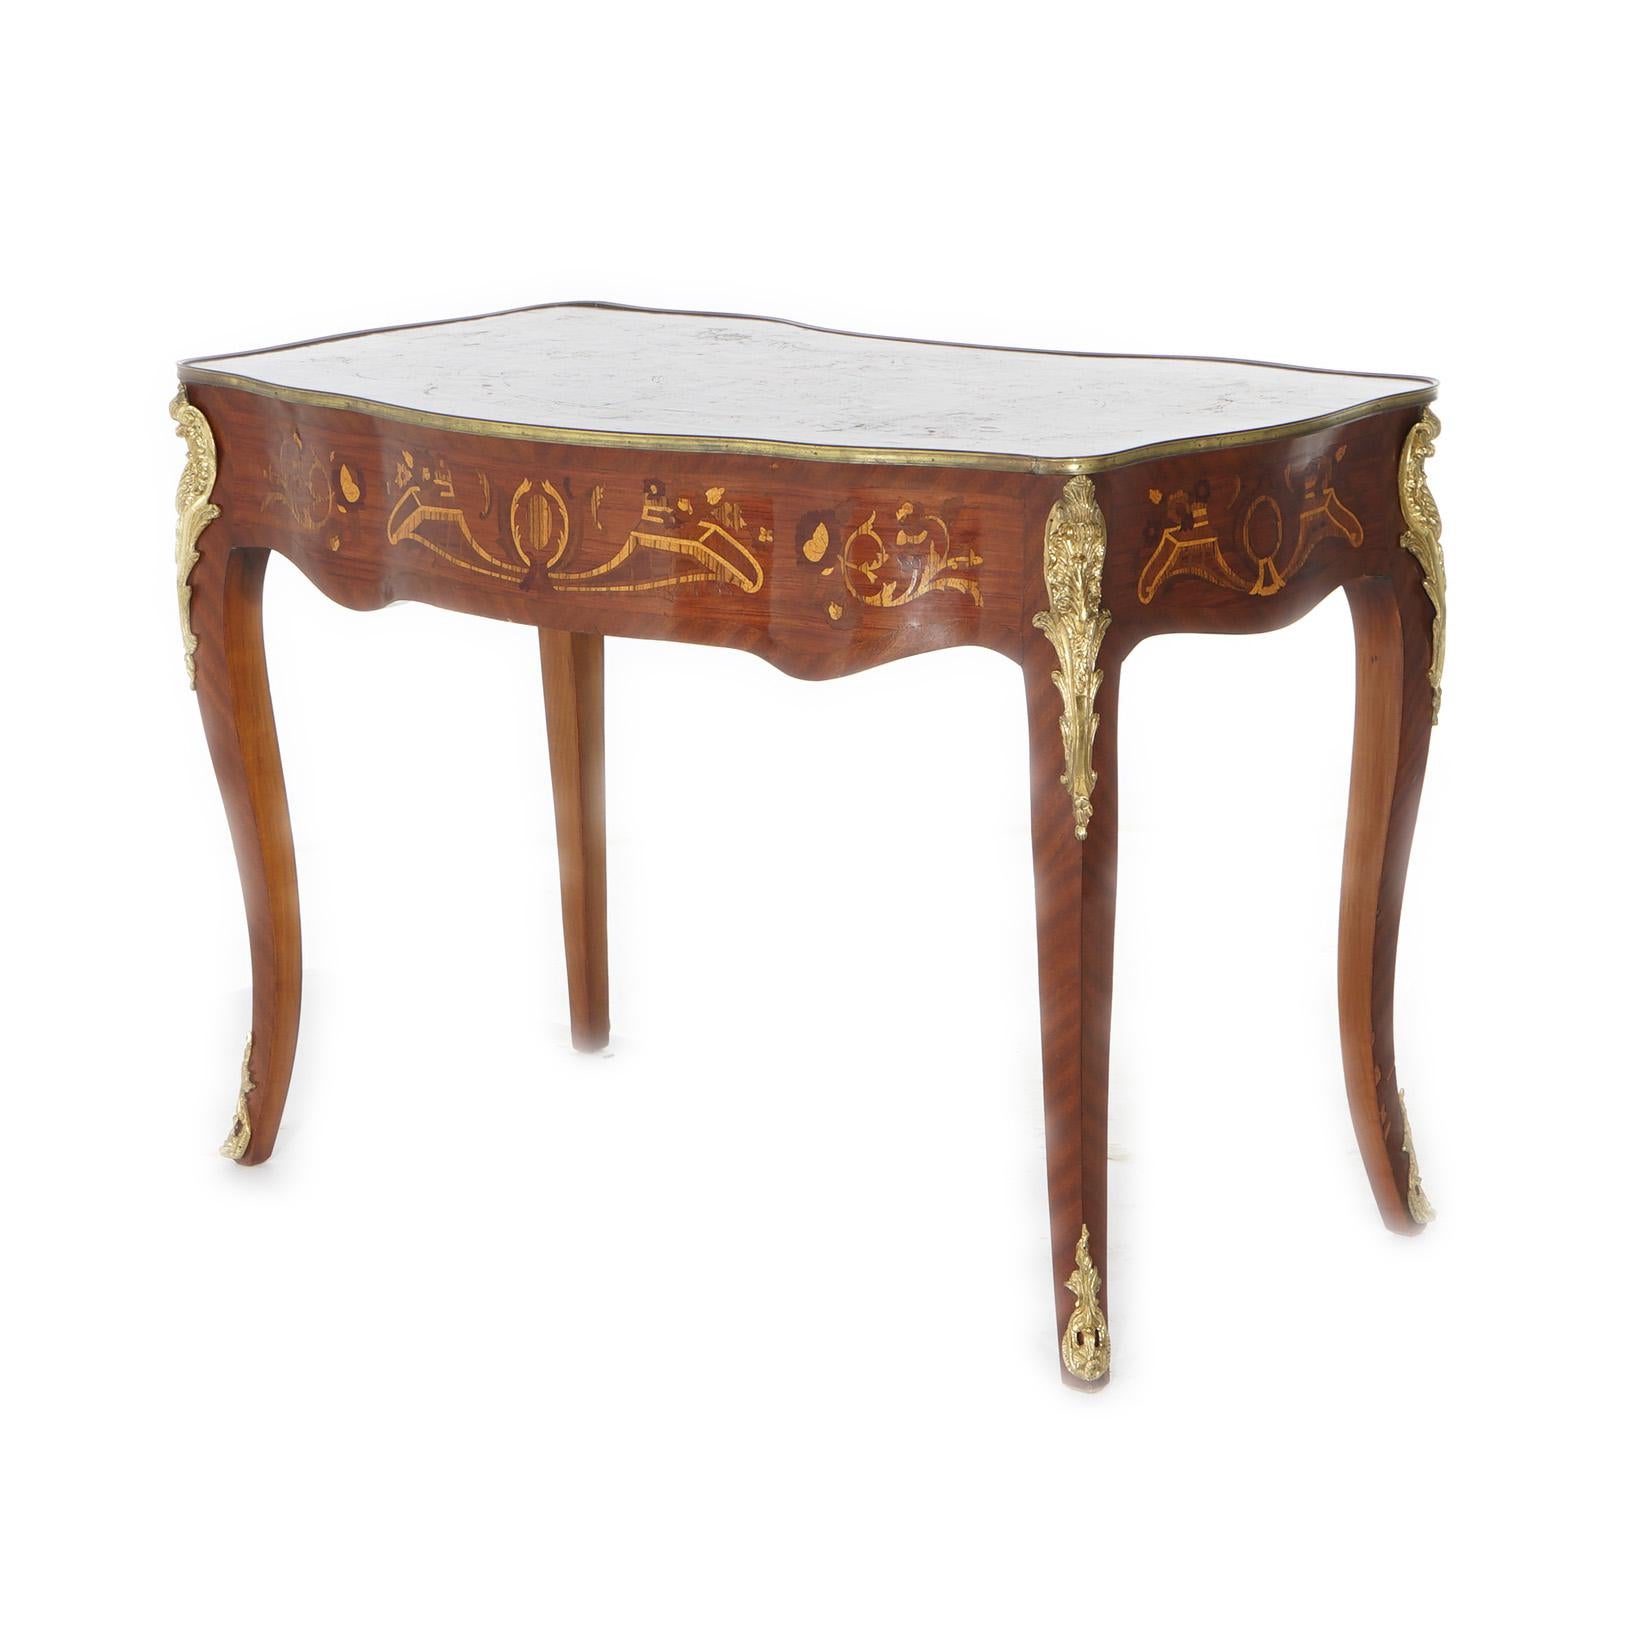 20th Century French Louis XIV Kingwood, Mahogany, Ormolu & Satinwood Bureau Plat Desk 20th C For Sale